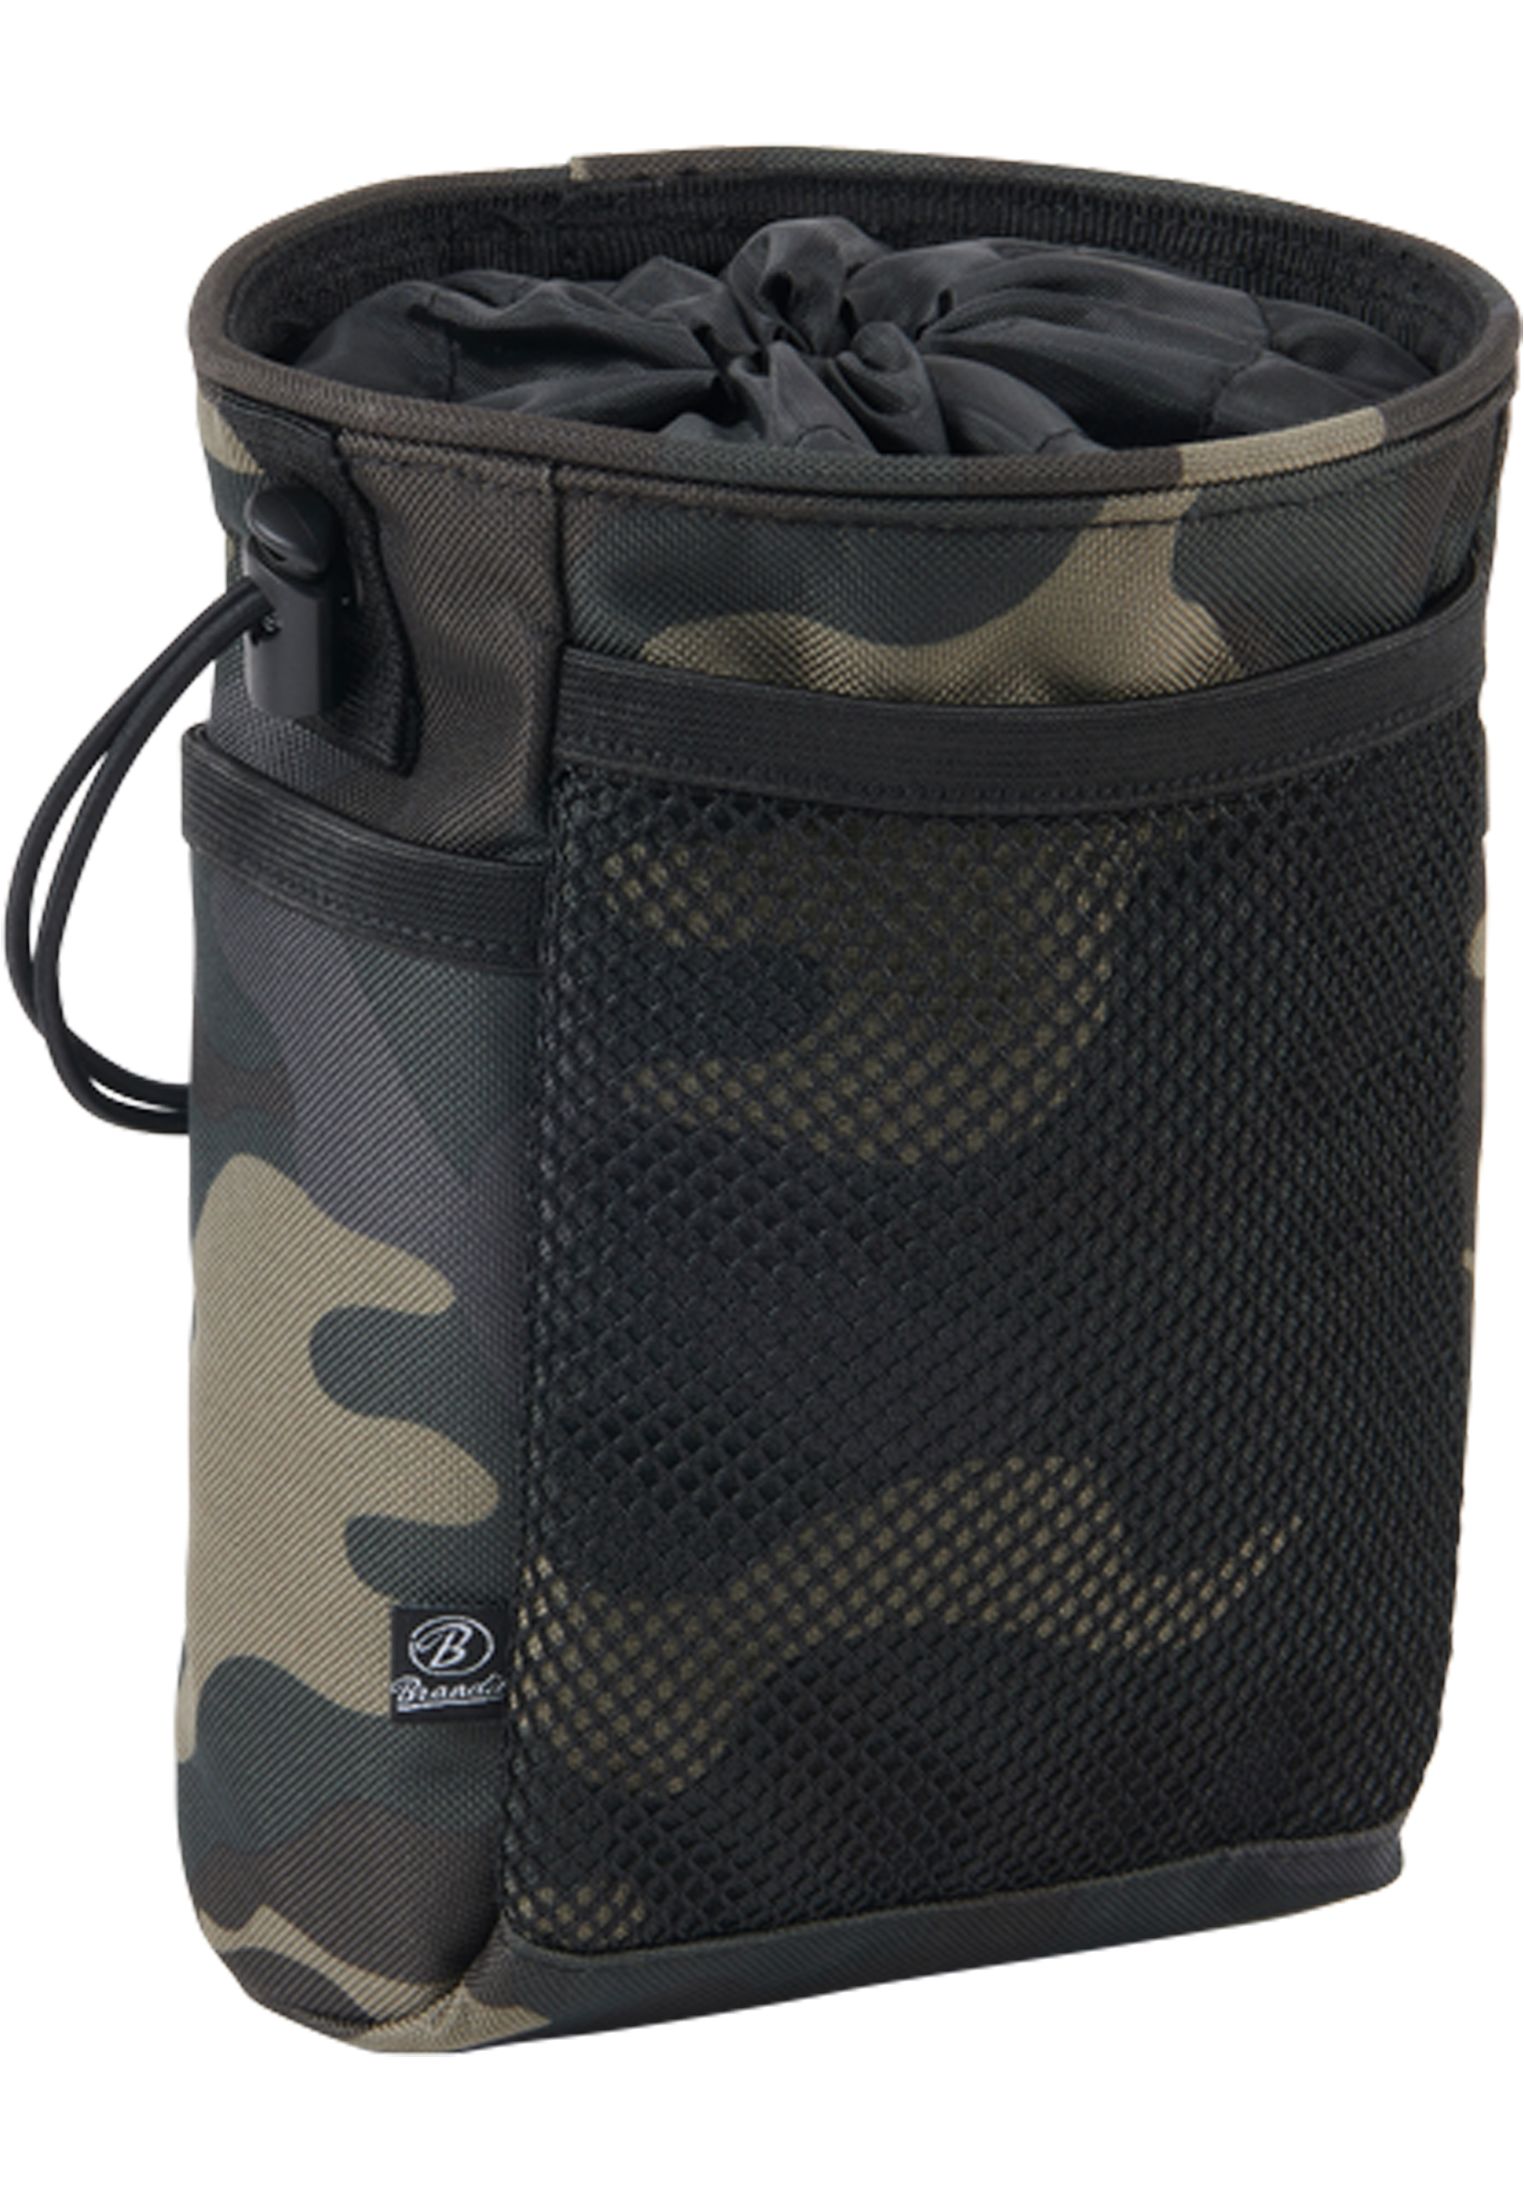 Taschen Molle Pouch Tactical in Farbe darkcamo